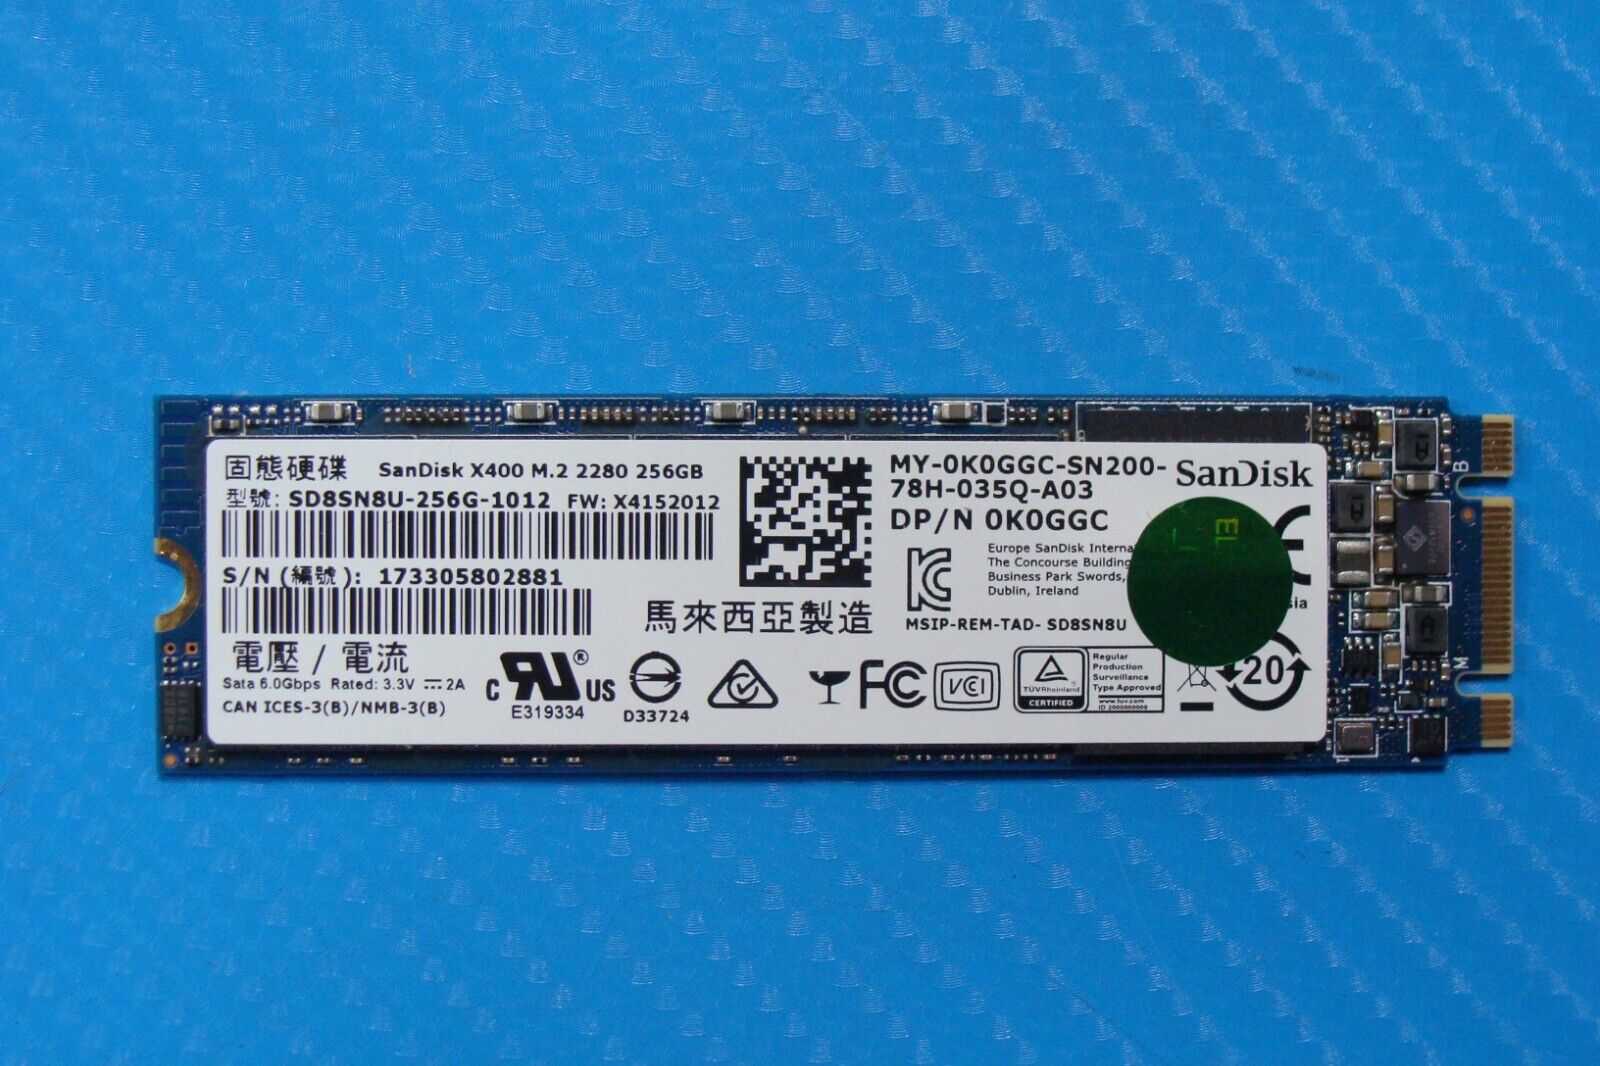 Dell 7373 SanDisk 256GB SATA M.2 SSD Solid State Drive SD8SN8U-256G-1012 K0GGC